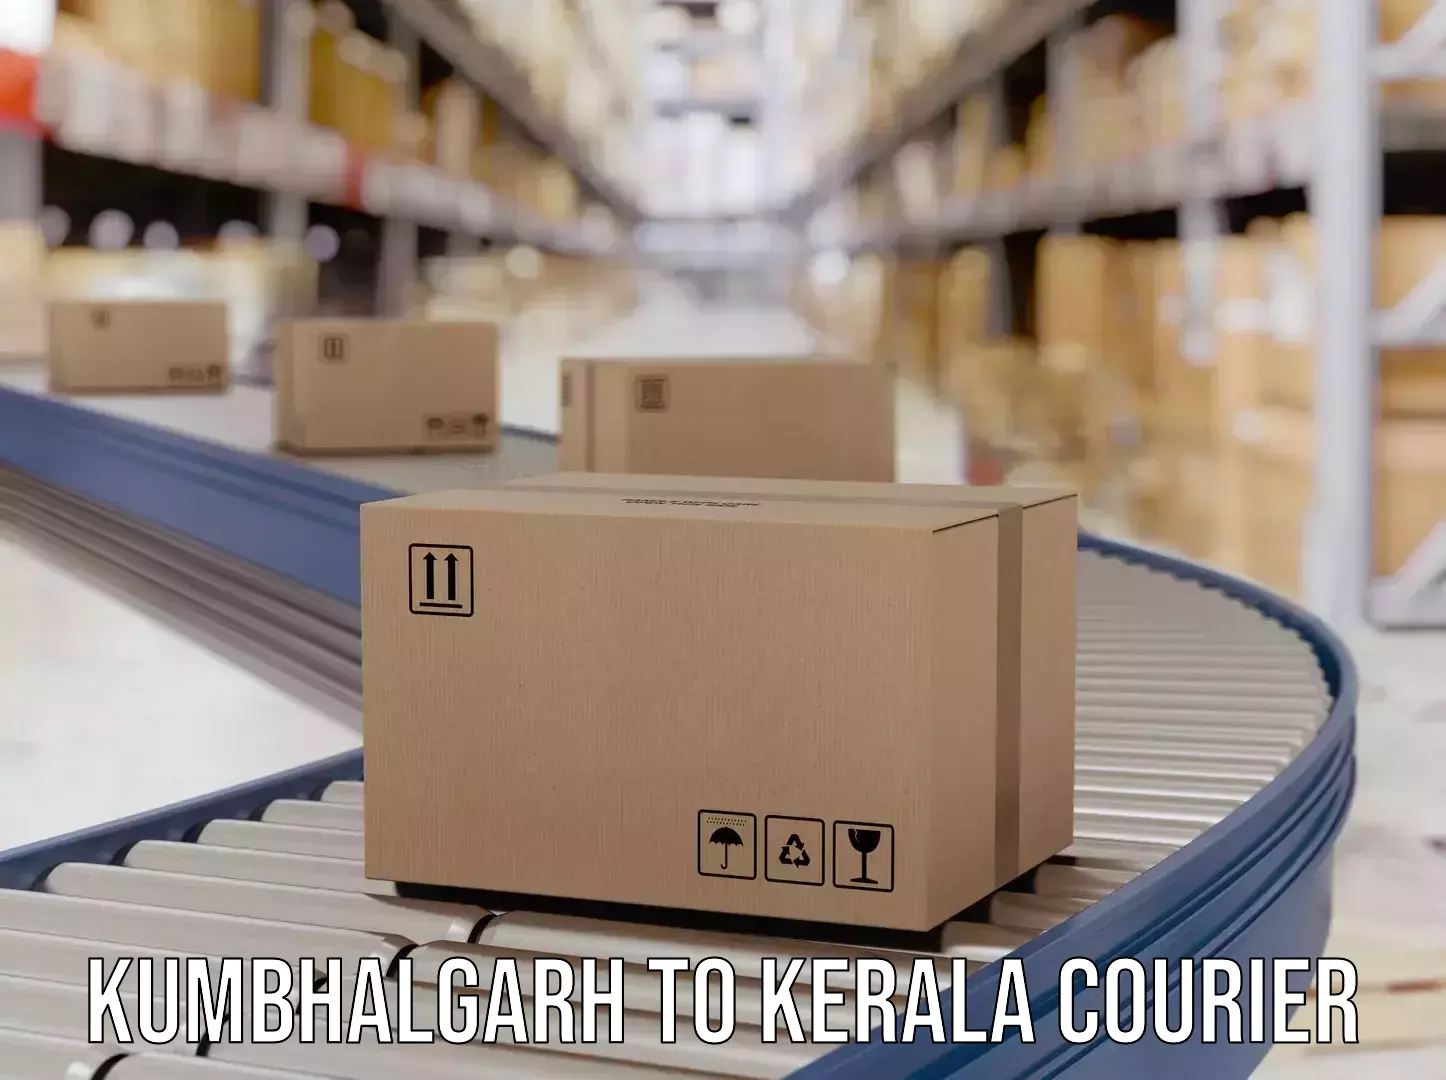 Courier service comparison Kumbhalgarh to Manthuka